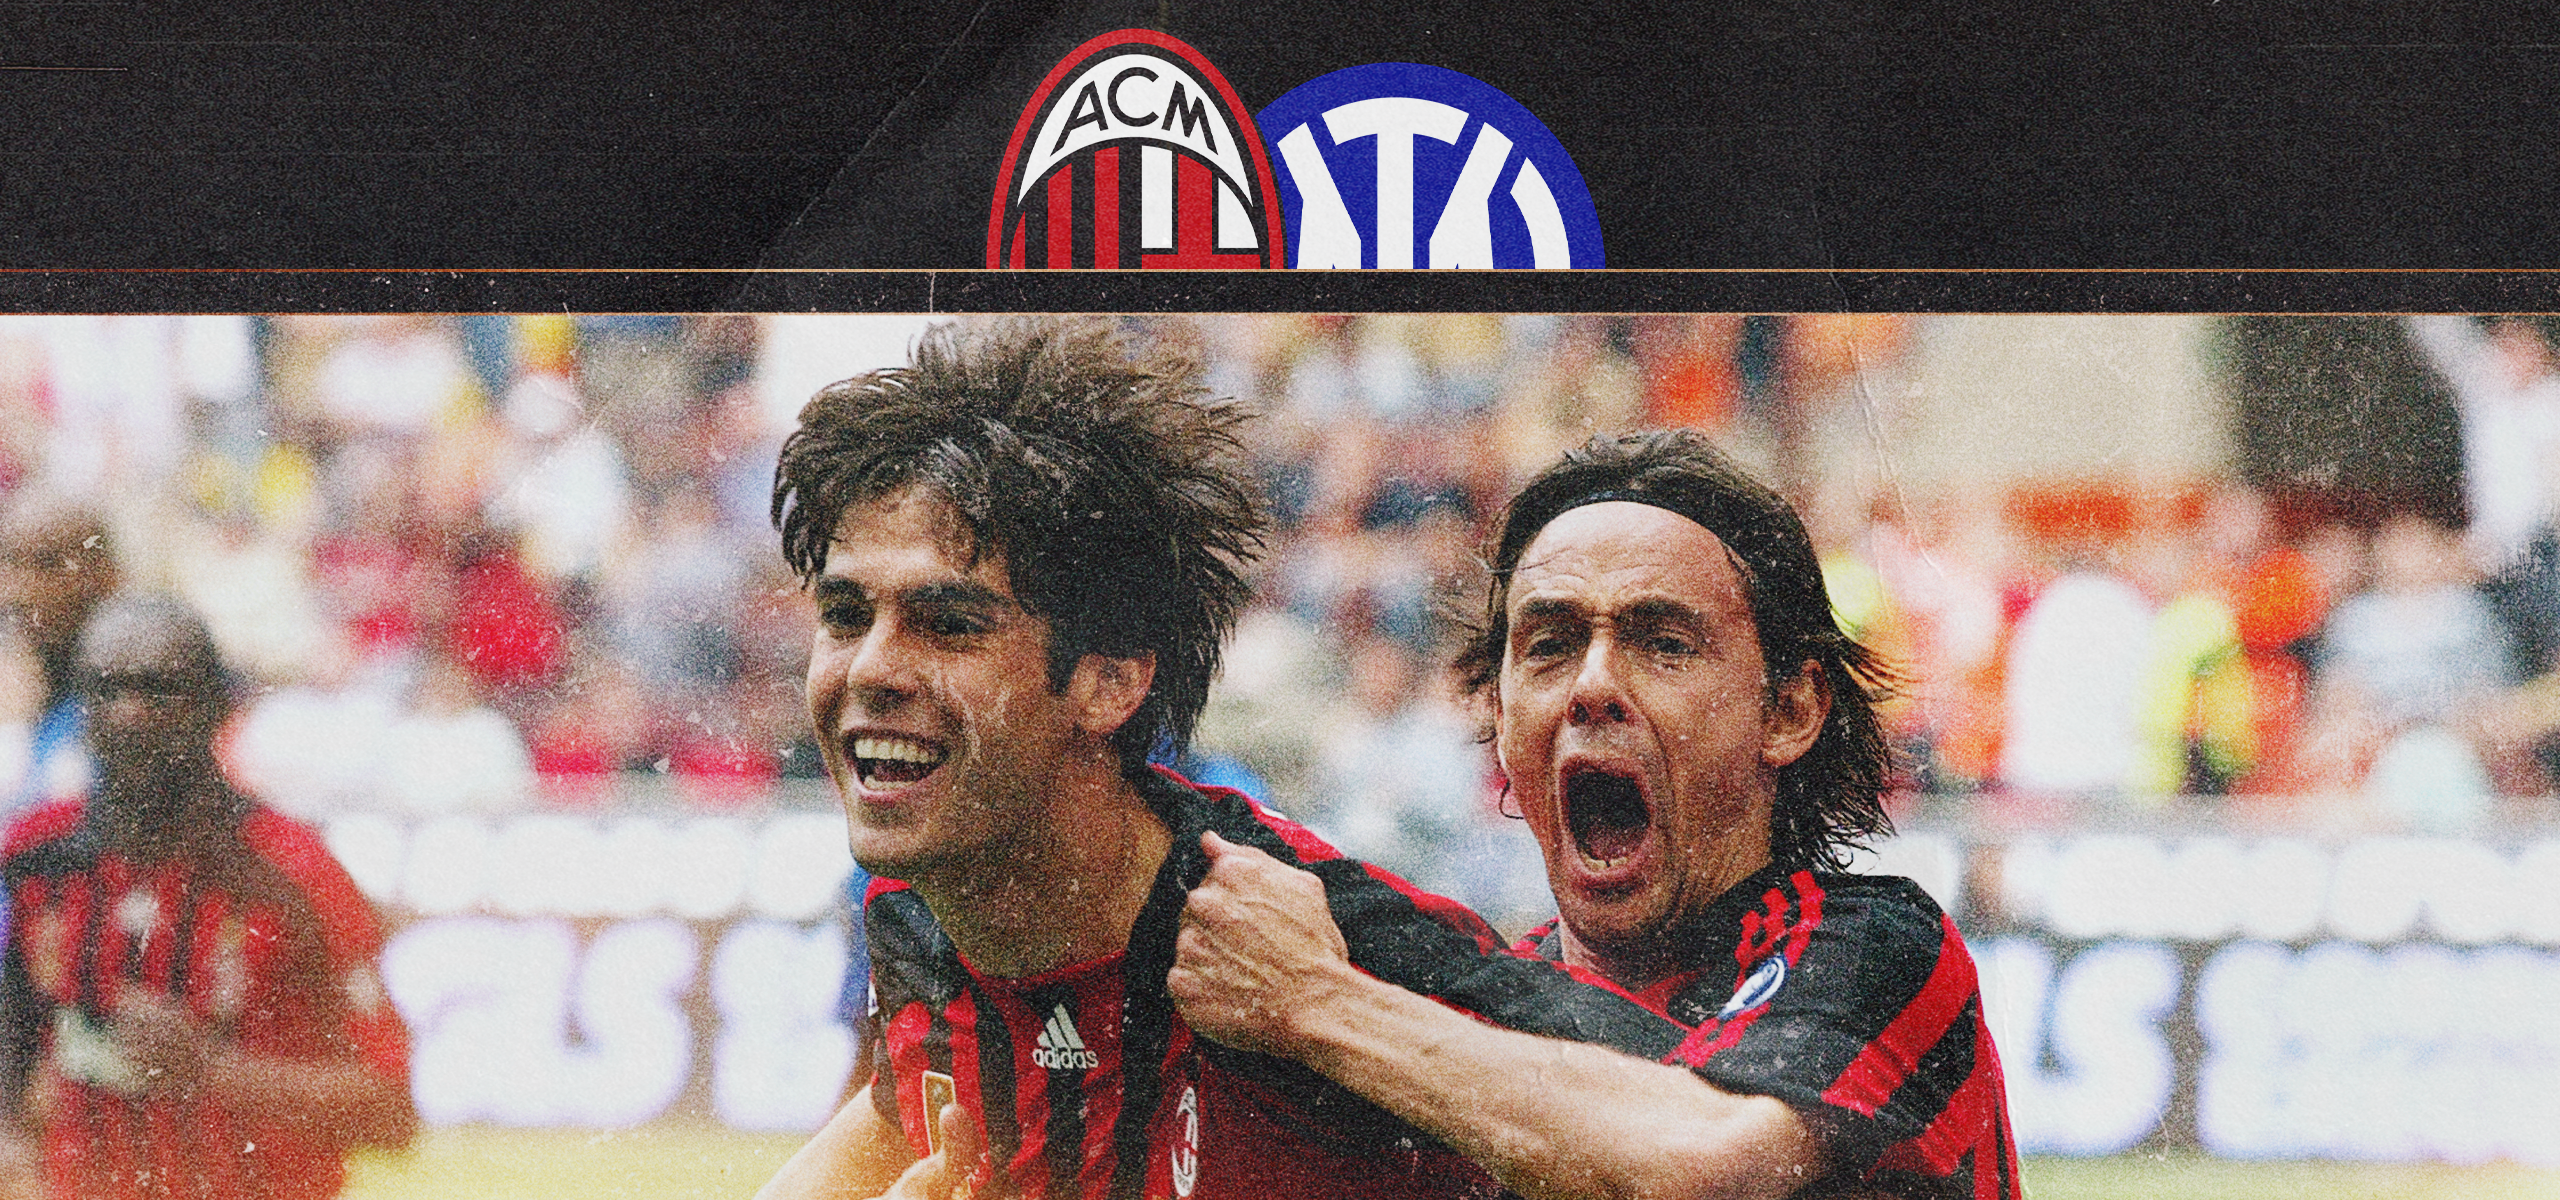 brud Portal jeg er træt AC Milan 2-1 Inter, Serie A 2007/08: The story of the match | AC Milan